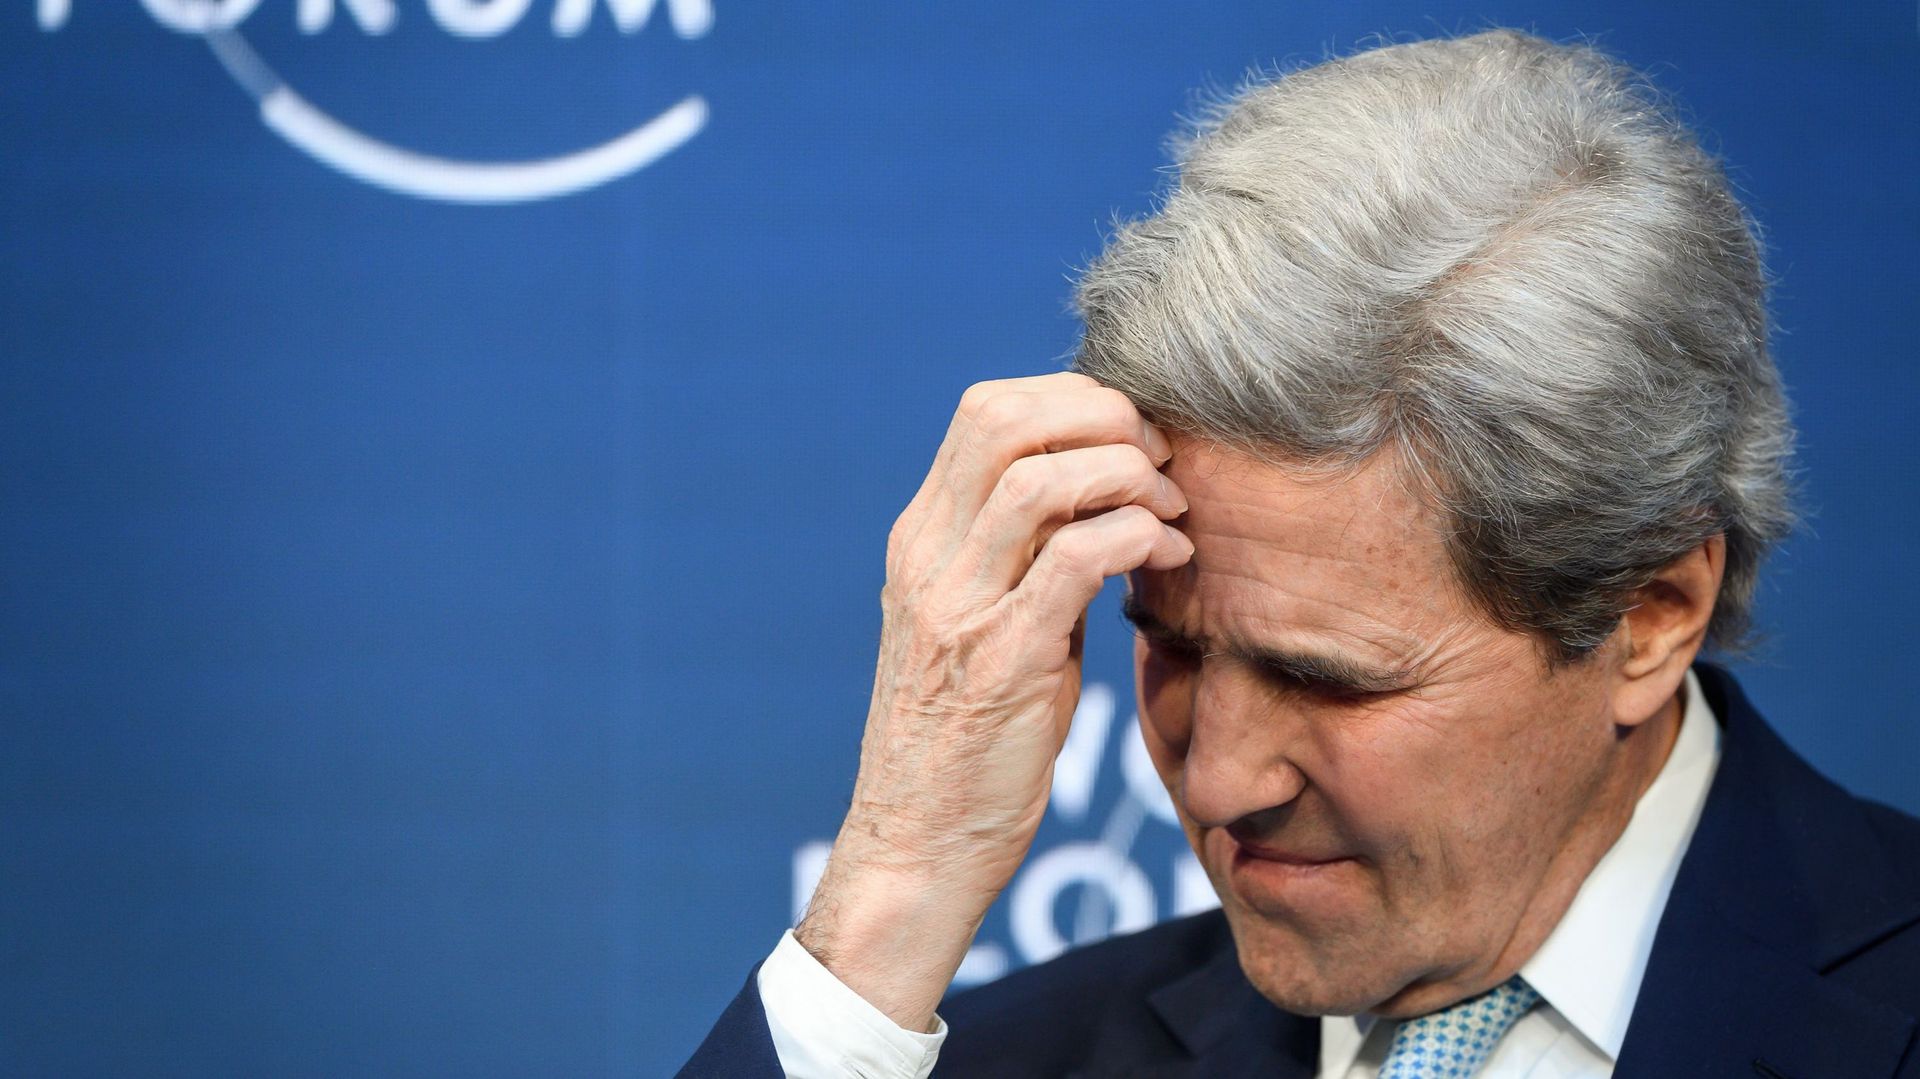 John Kerry à Davos en 2019 (image d'illustration) 